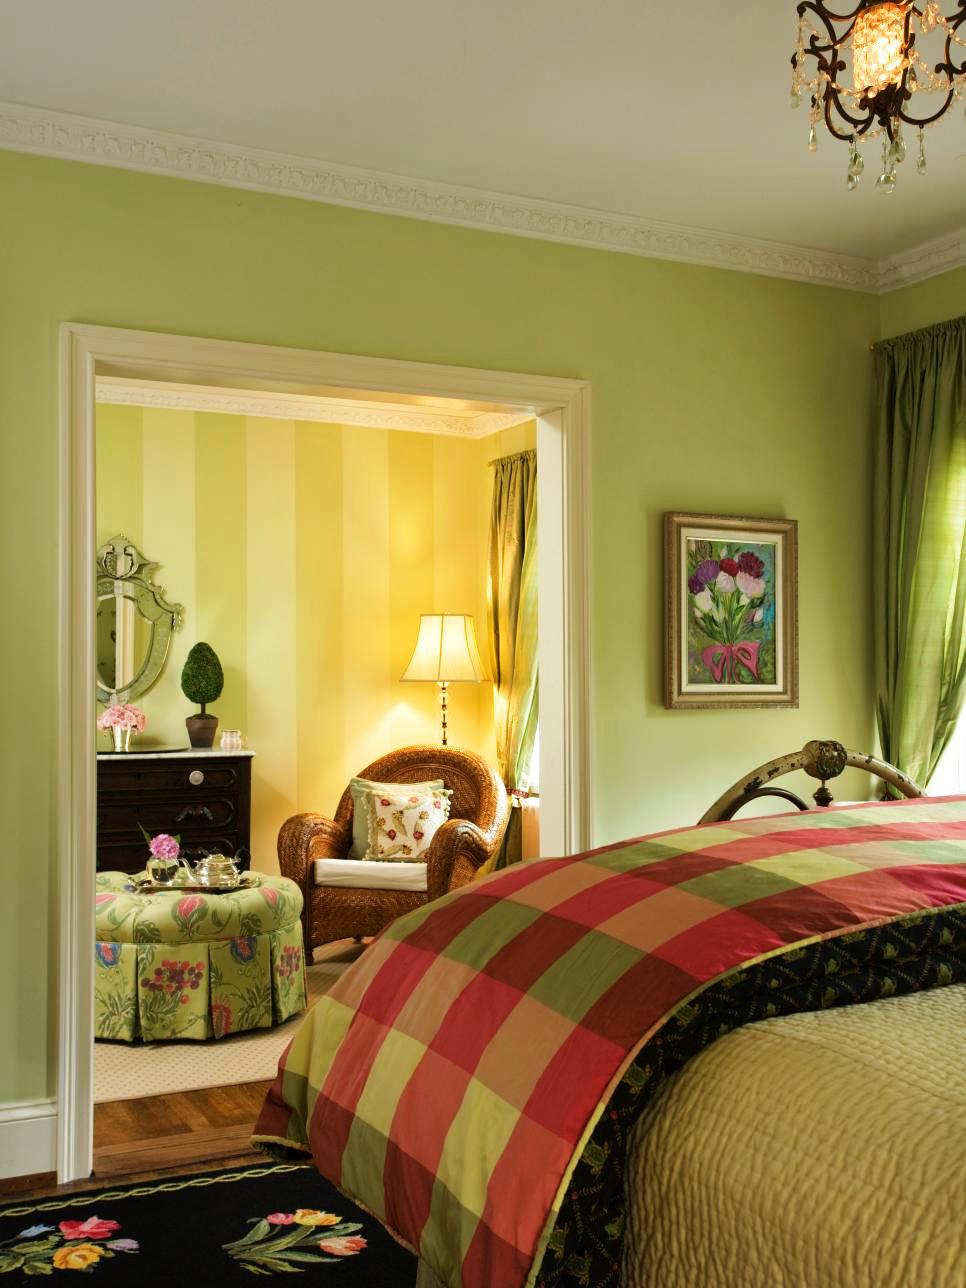 40 Amazing Pastel Colored Bedroom Ideas